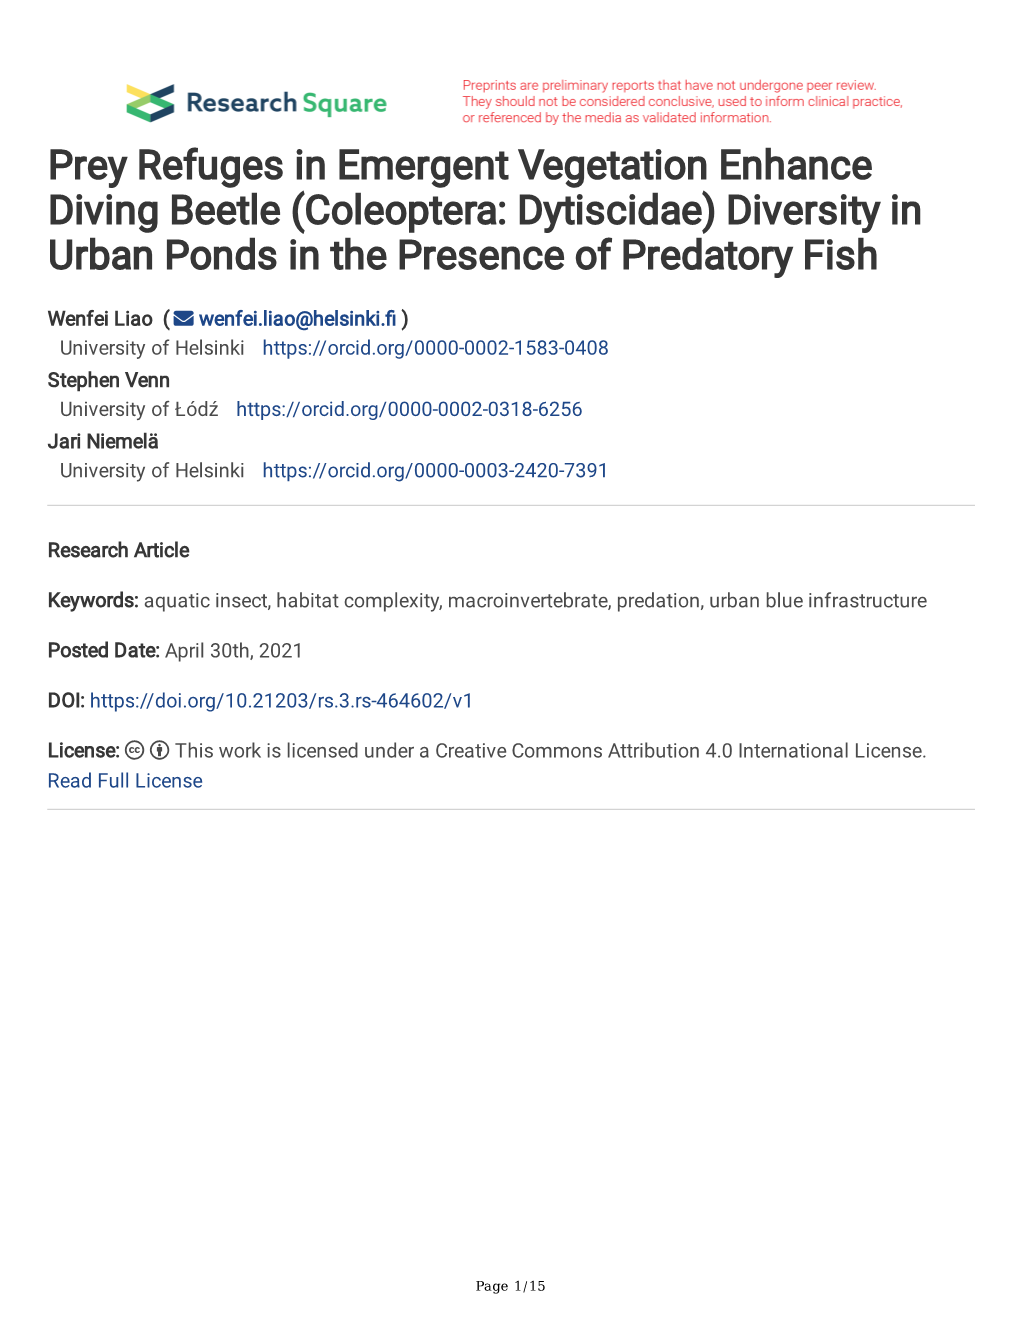 Prey Refuges in Emergent Vegetation Enhance Diving Beetle (Coleoptera: Dytiscidae) Diversity in Urban Ponds in the Presence of Predatory Fish